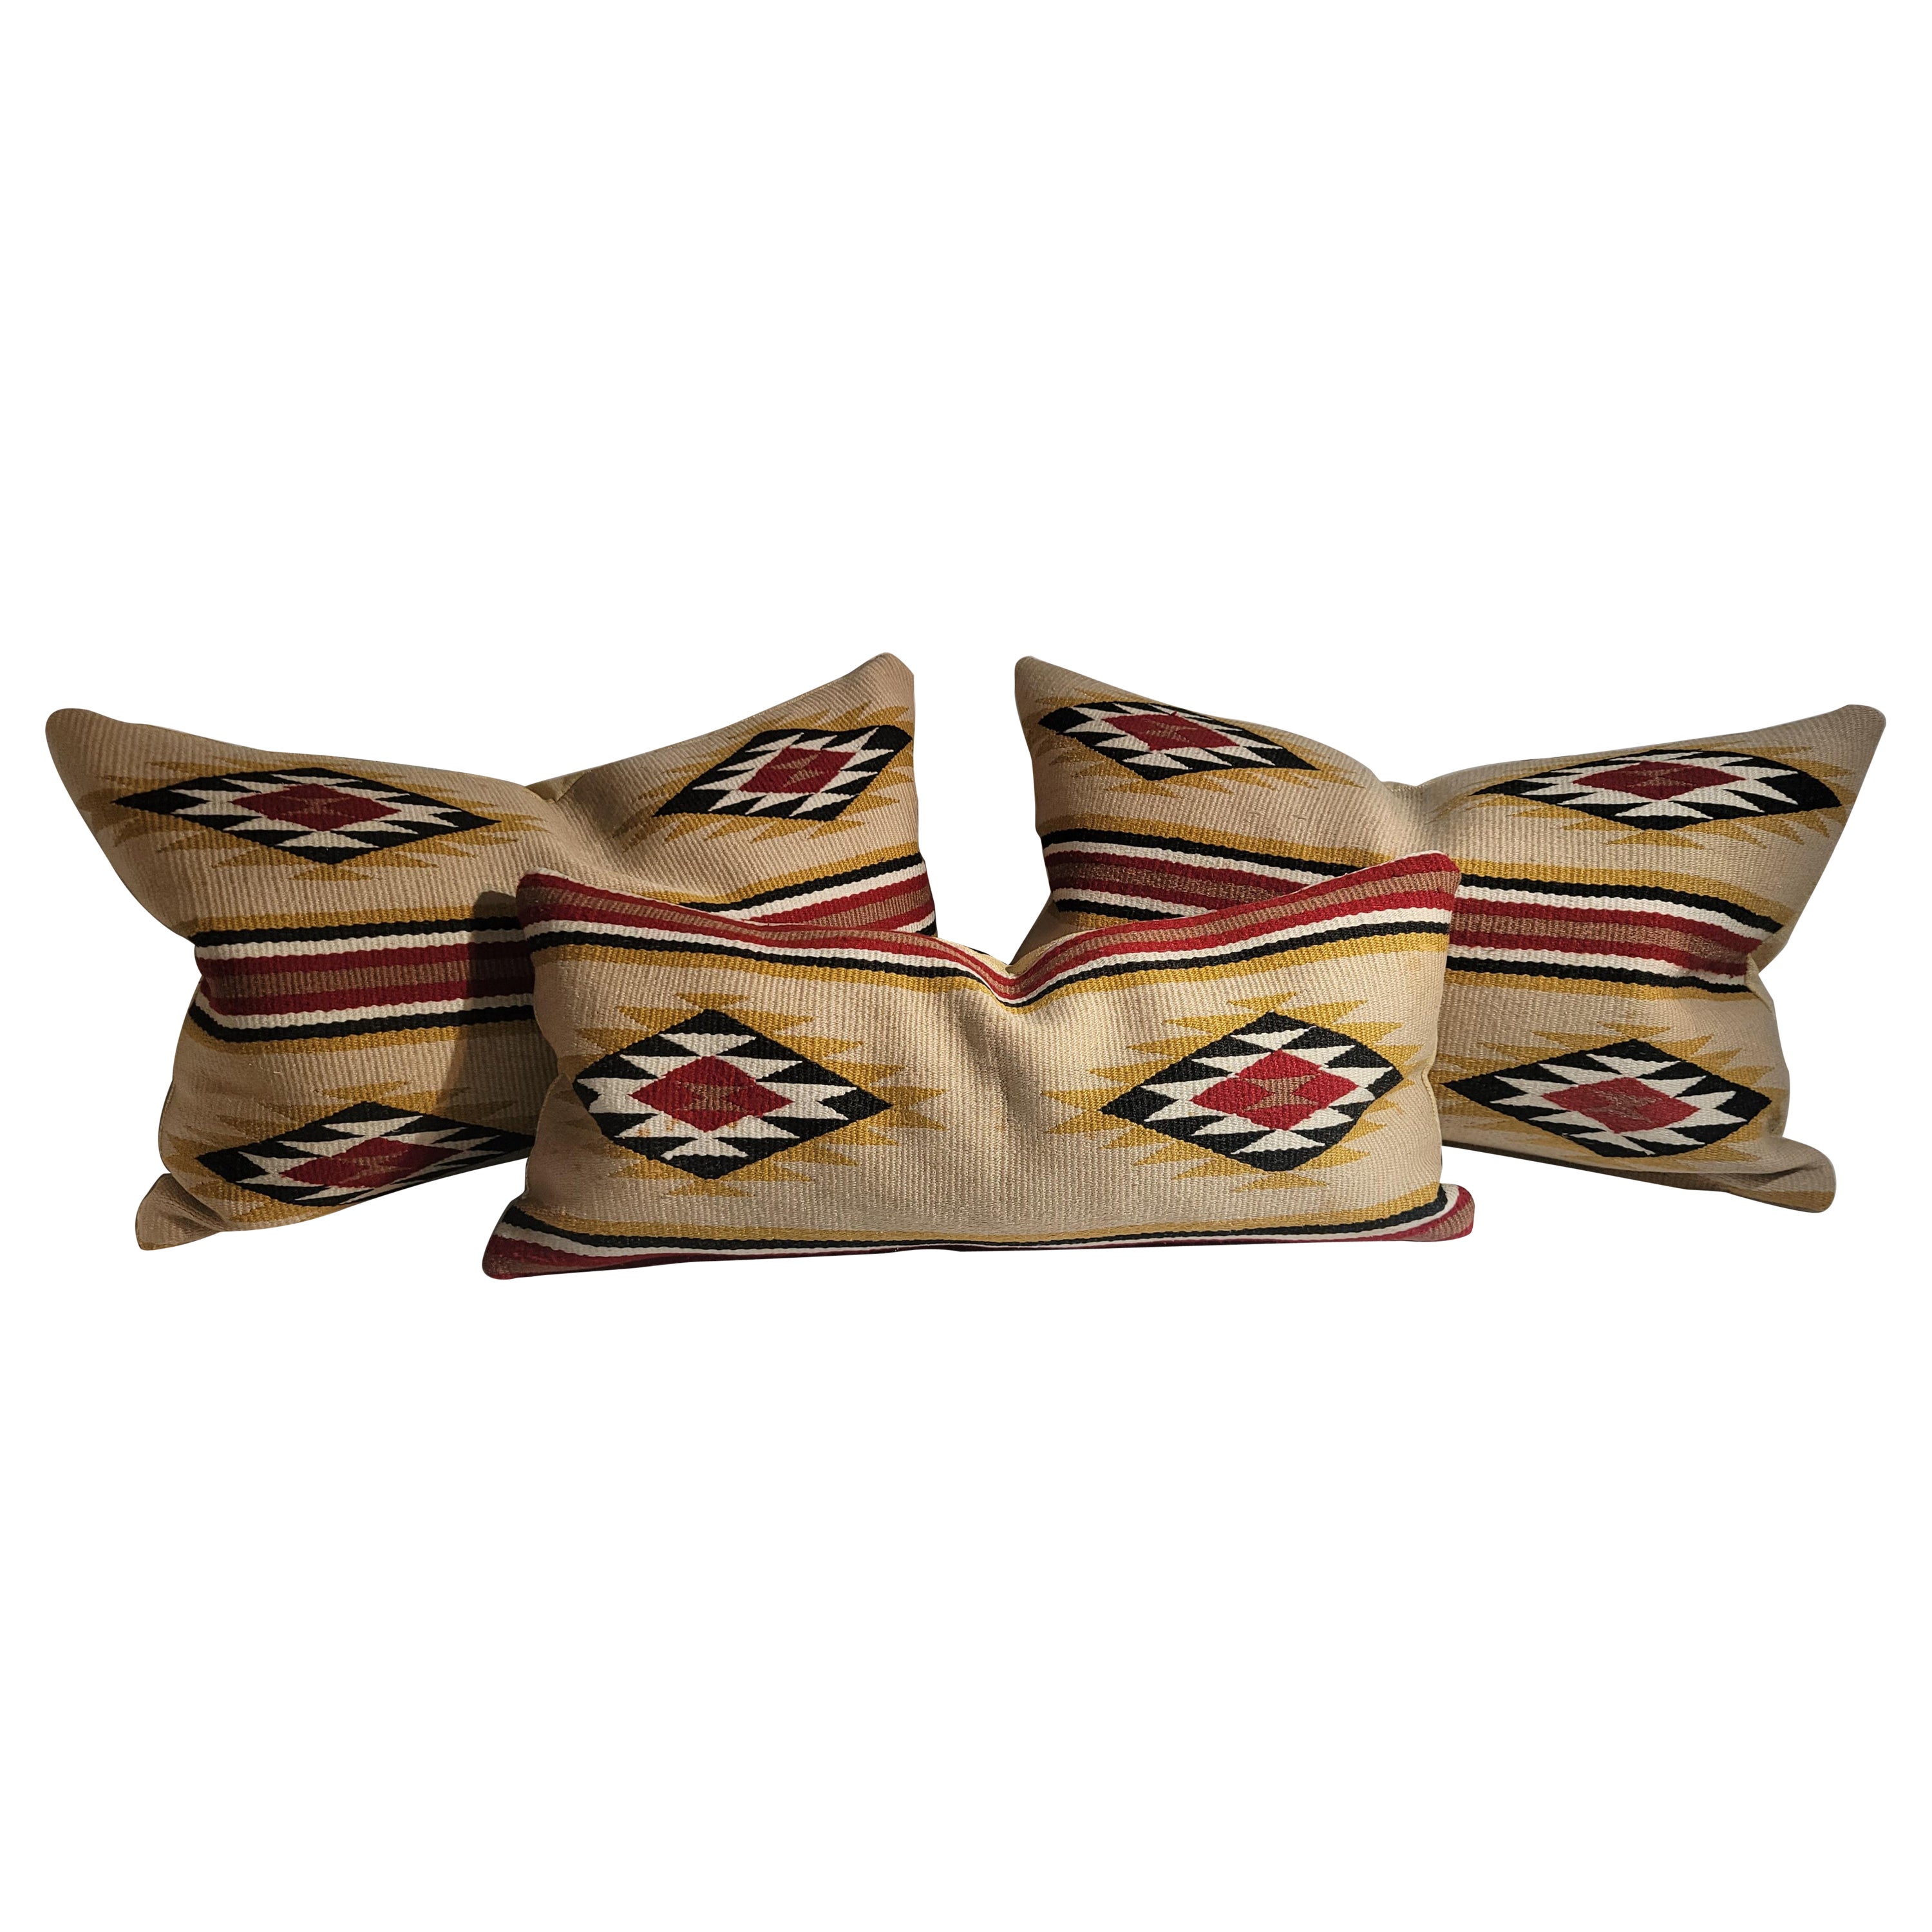 Collection de coussins de traversin Eye Dazzler, tissage indien Navajo